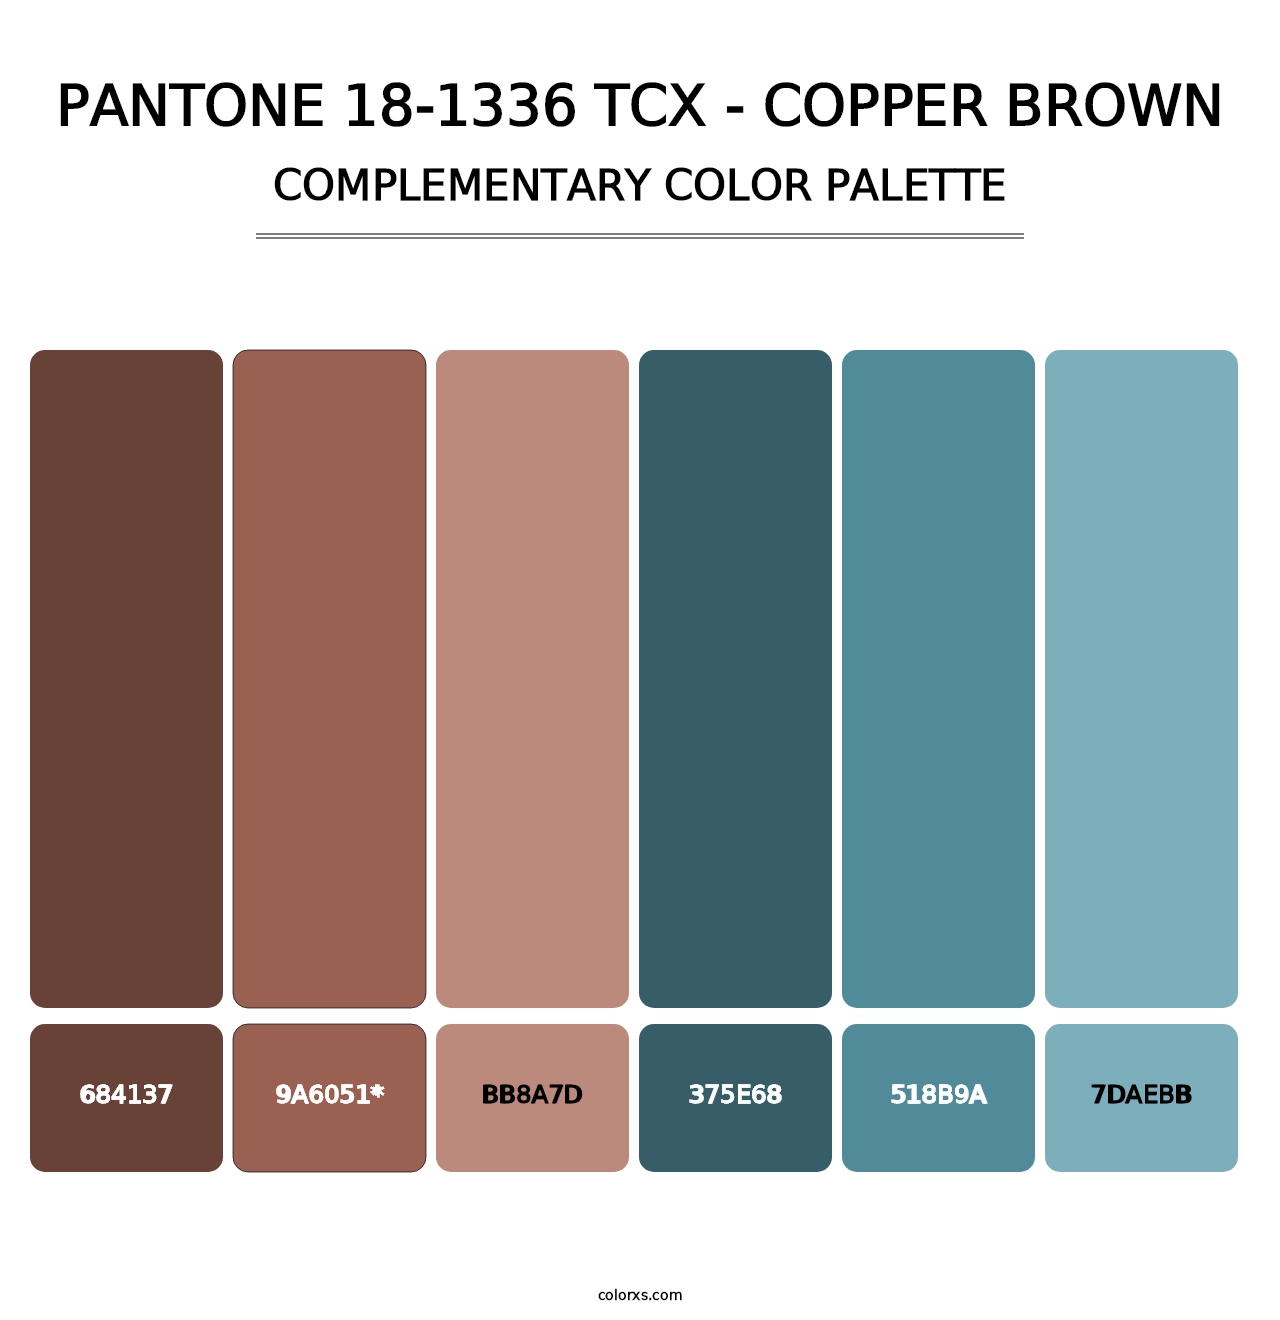 PANTONE 18-1336 TCX - Copper Brown - Complementary Color Palette